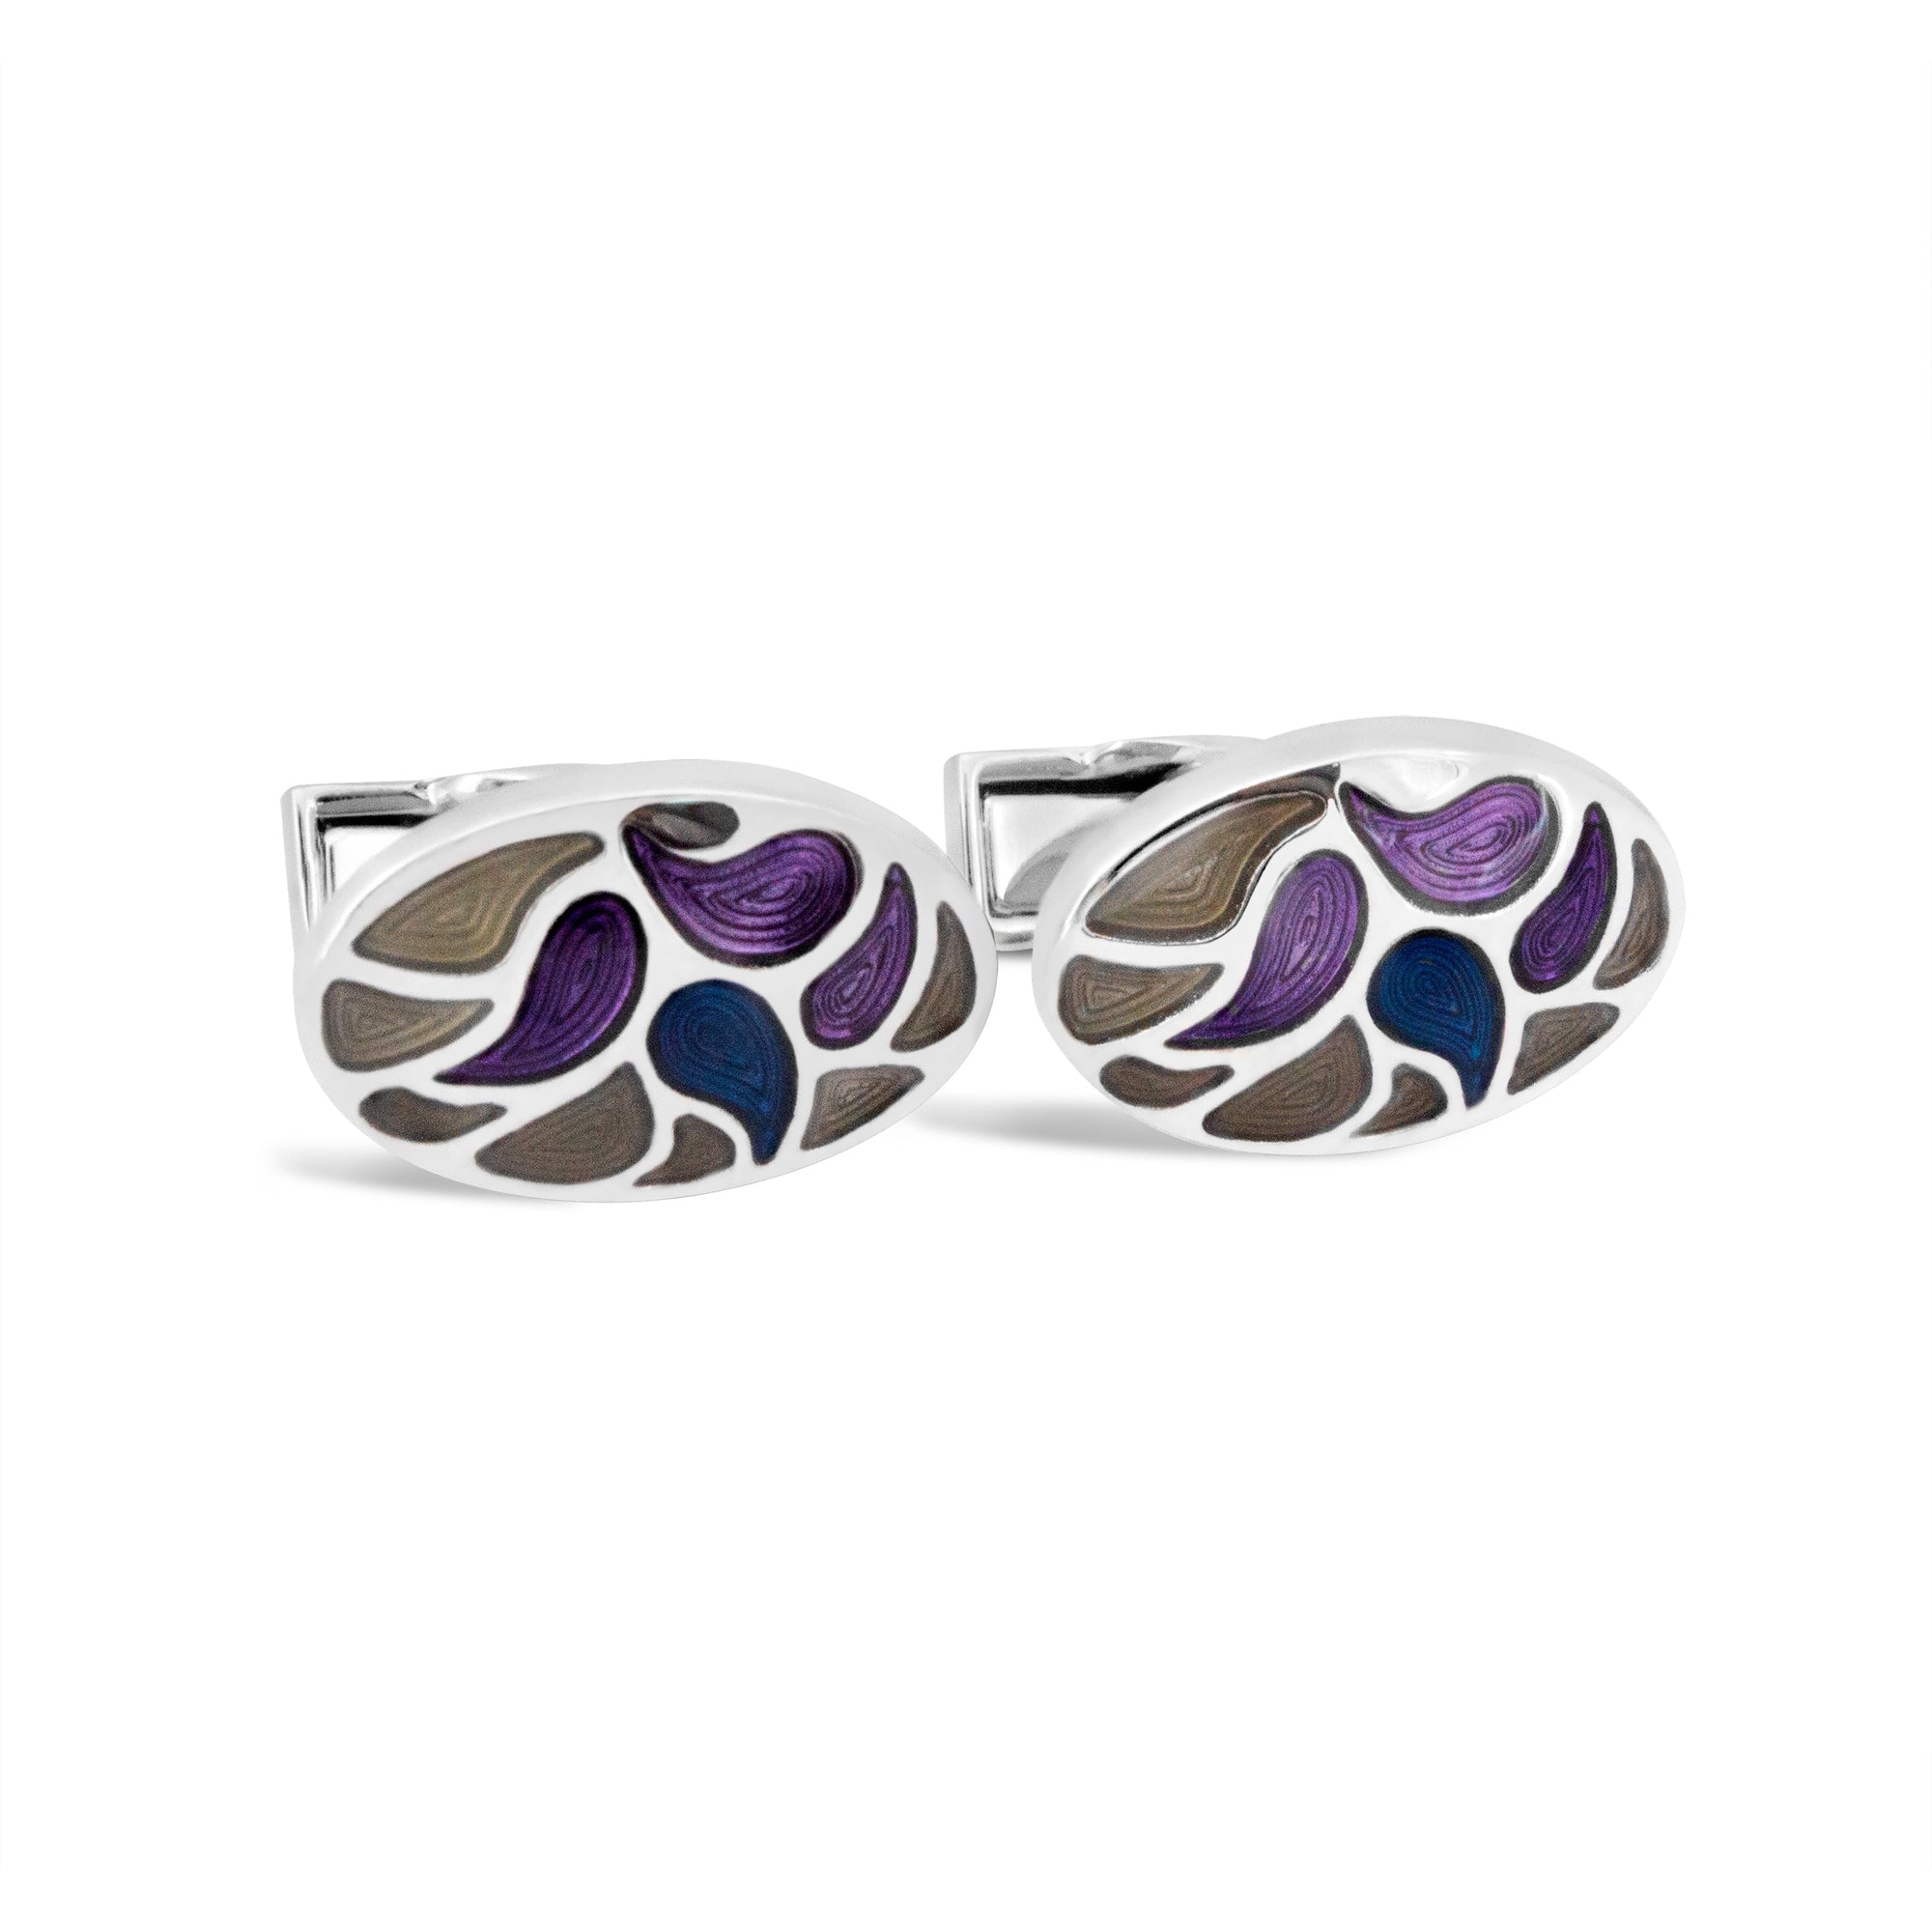 Oval Teardrop Design Cufflinks in Purple-Cufflinks.com.sg